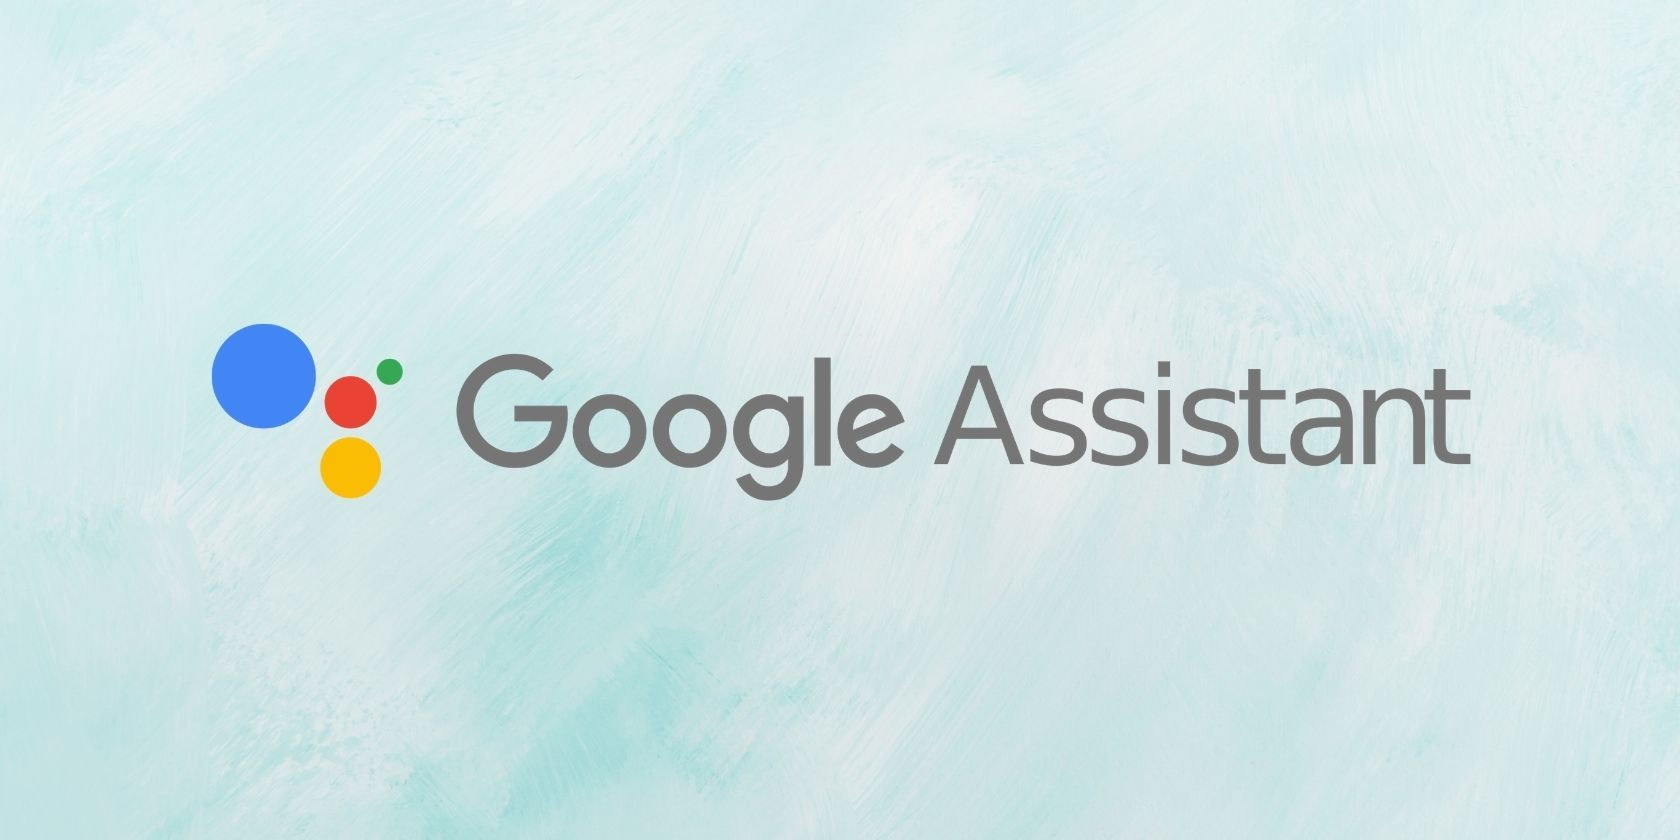 Google Assistant logo on background